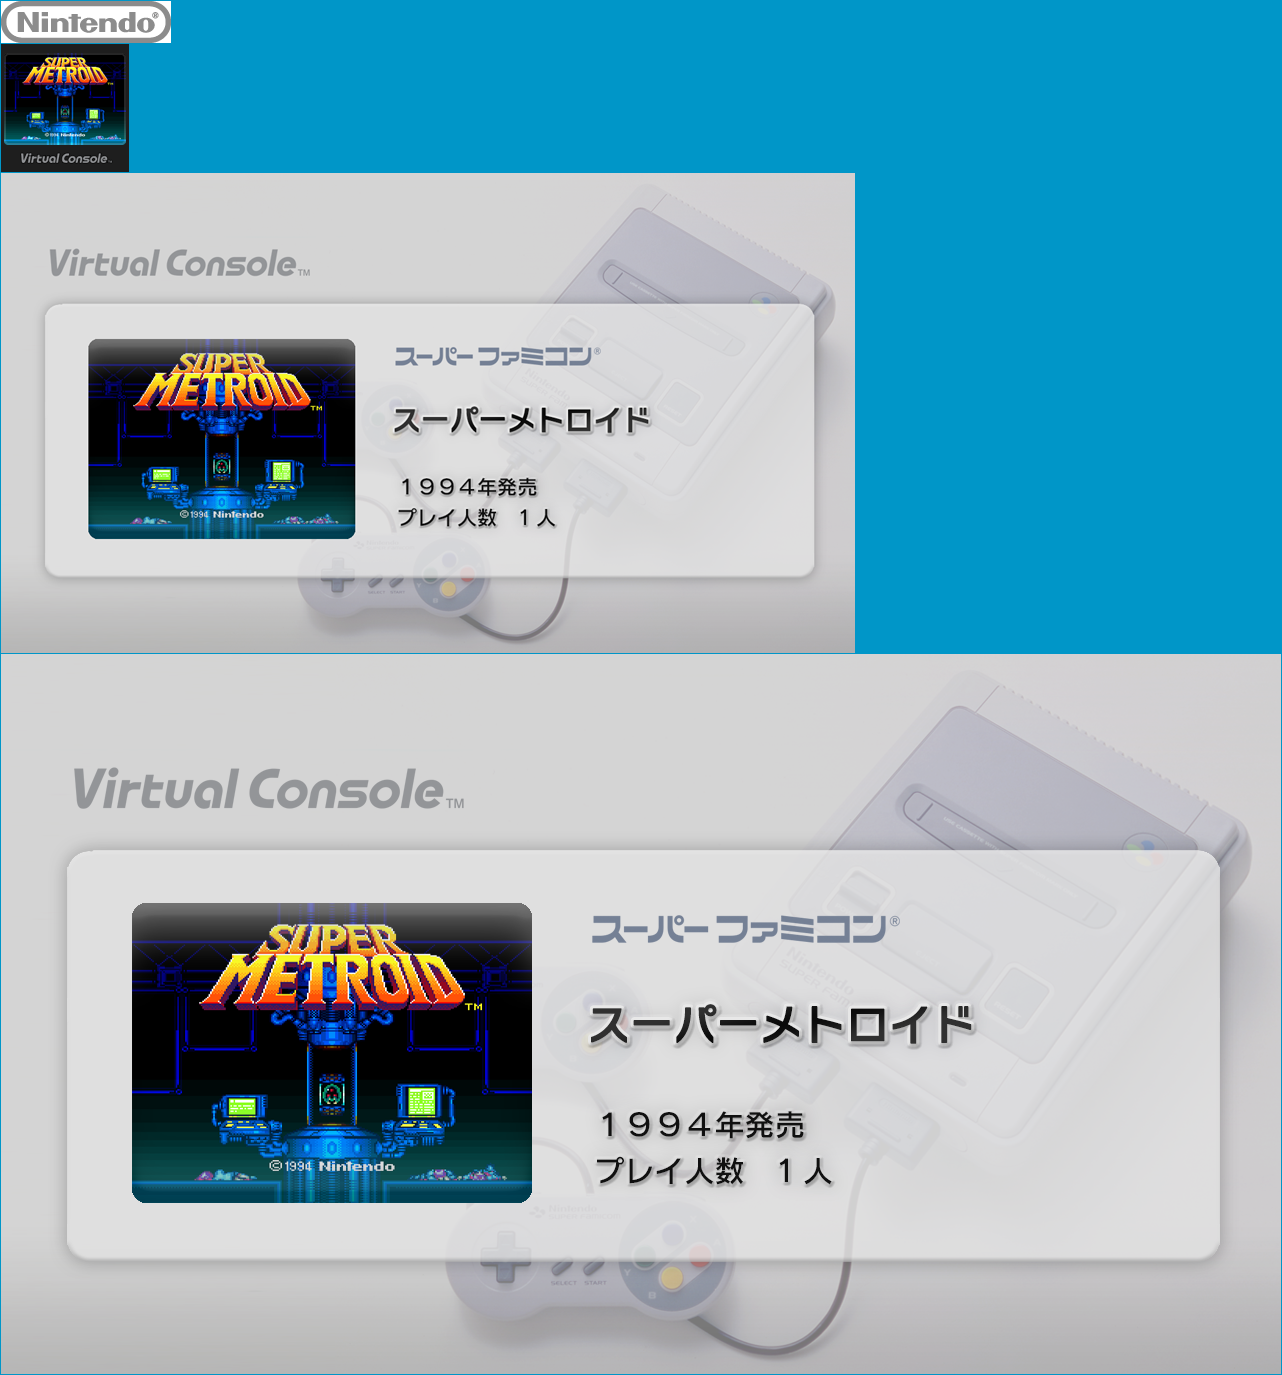 Virtual Console - Super Metroid